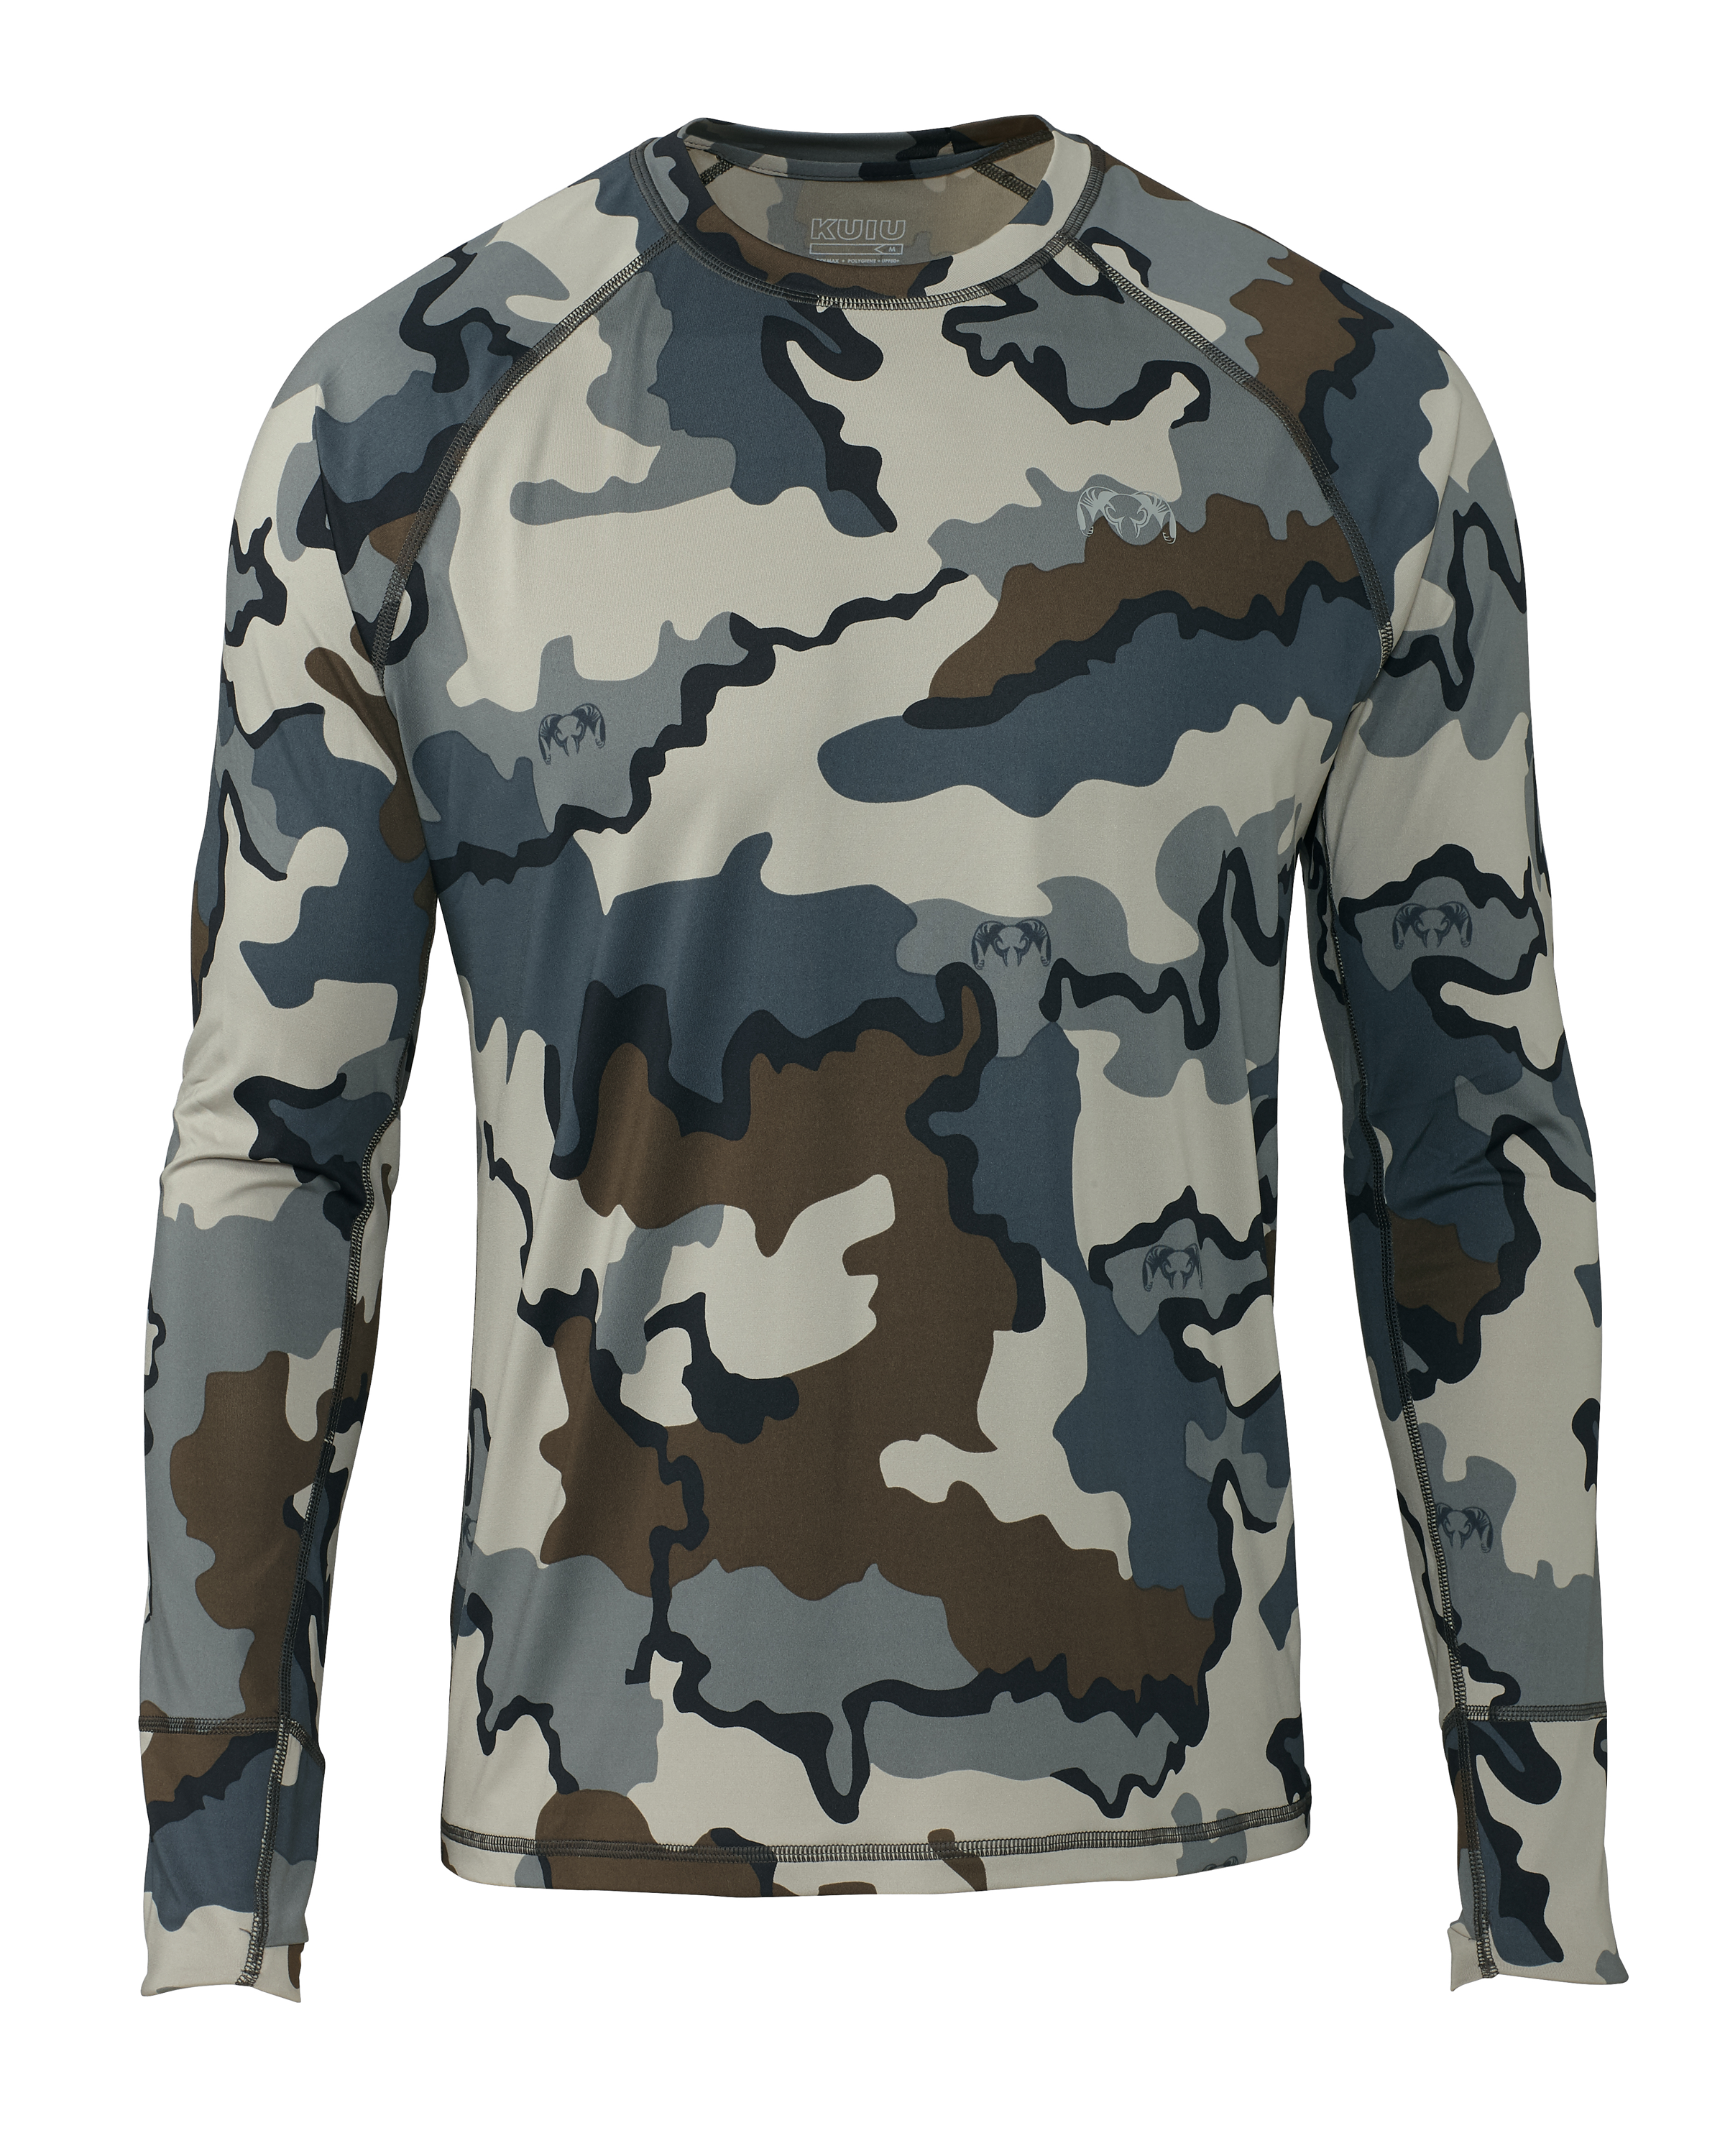 KUIU Gila Long Sleeves Crew Hunting Shirt in Vias | Size 2XL